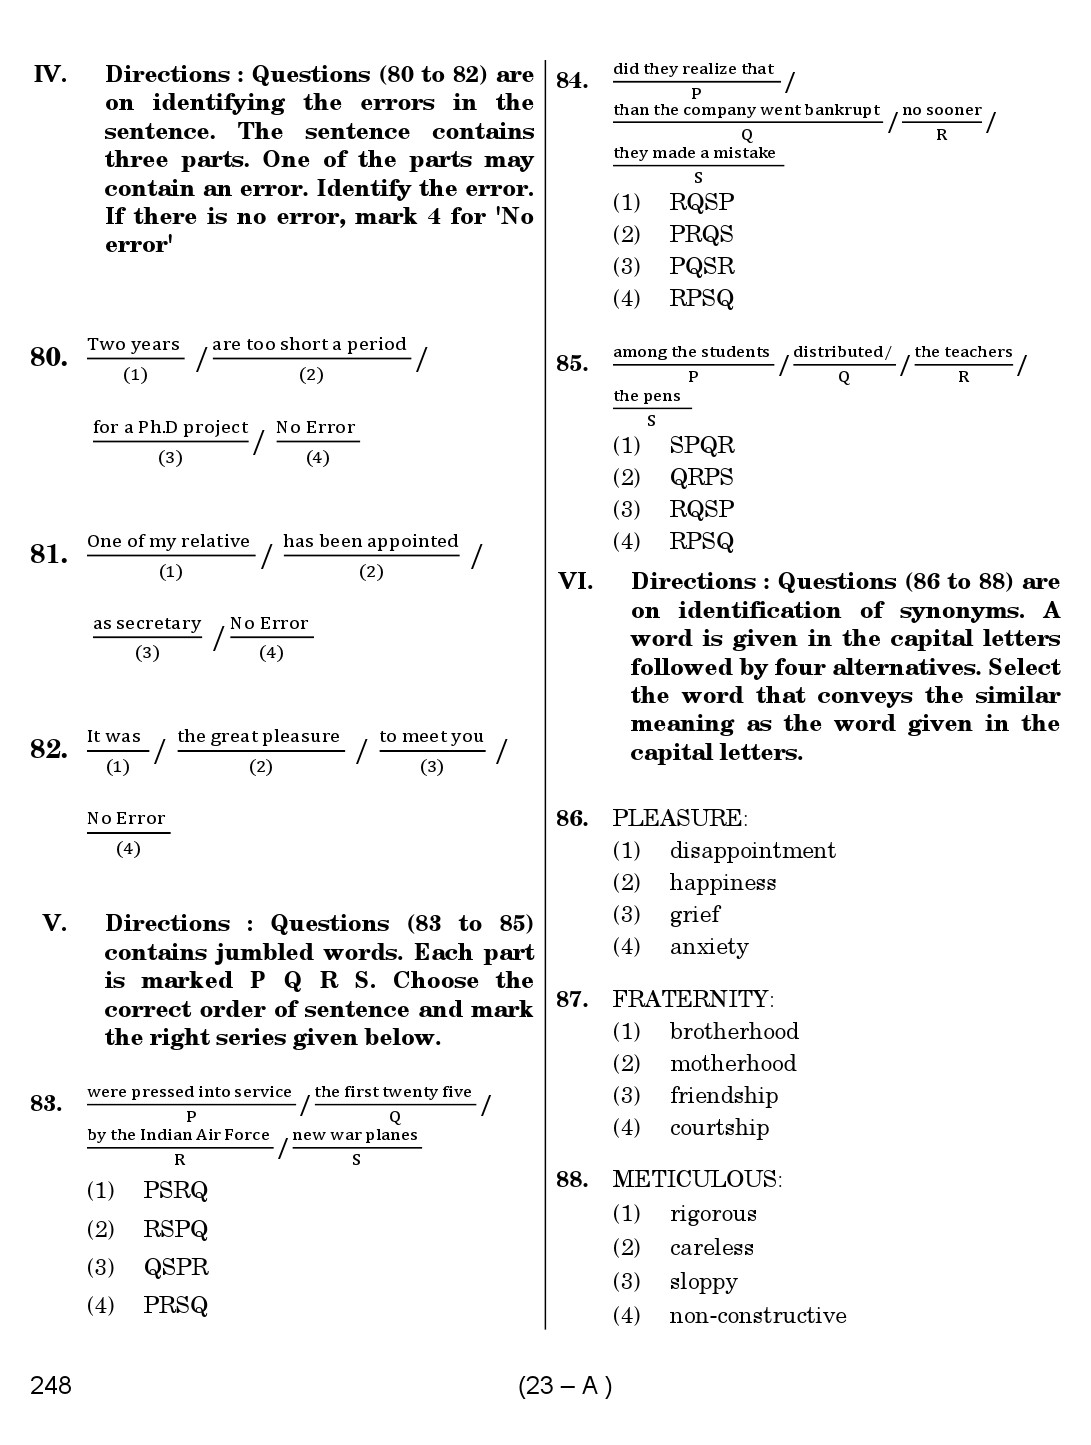 Karnataka PSC Laboratory Assistant Exam Sample Question Paper 23